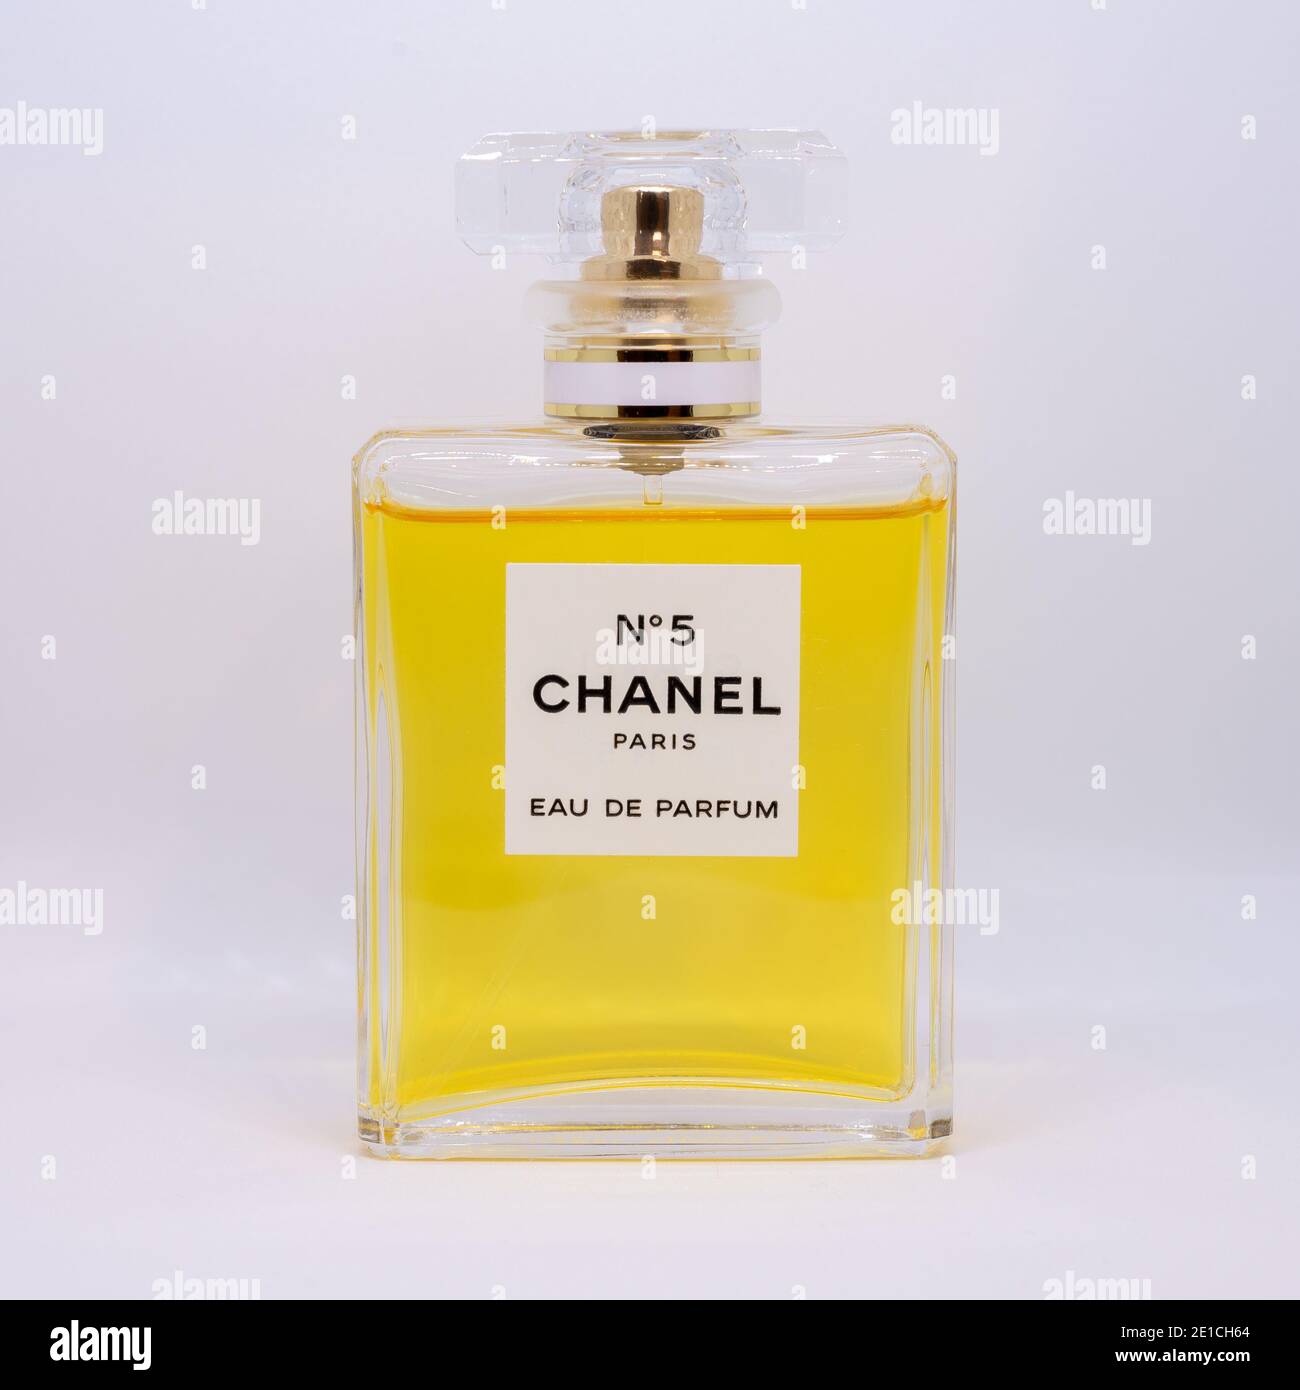 Chanel No 5 Perfume Stock Photo - Download Image Now - iStock